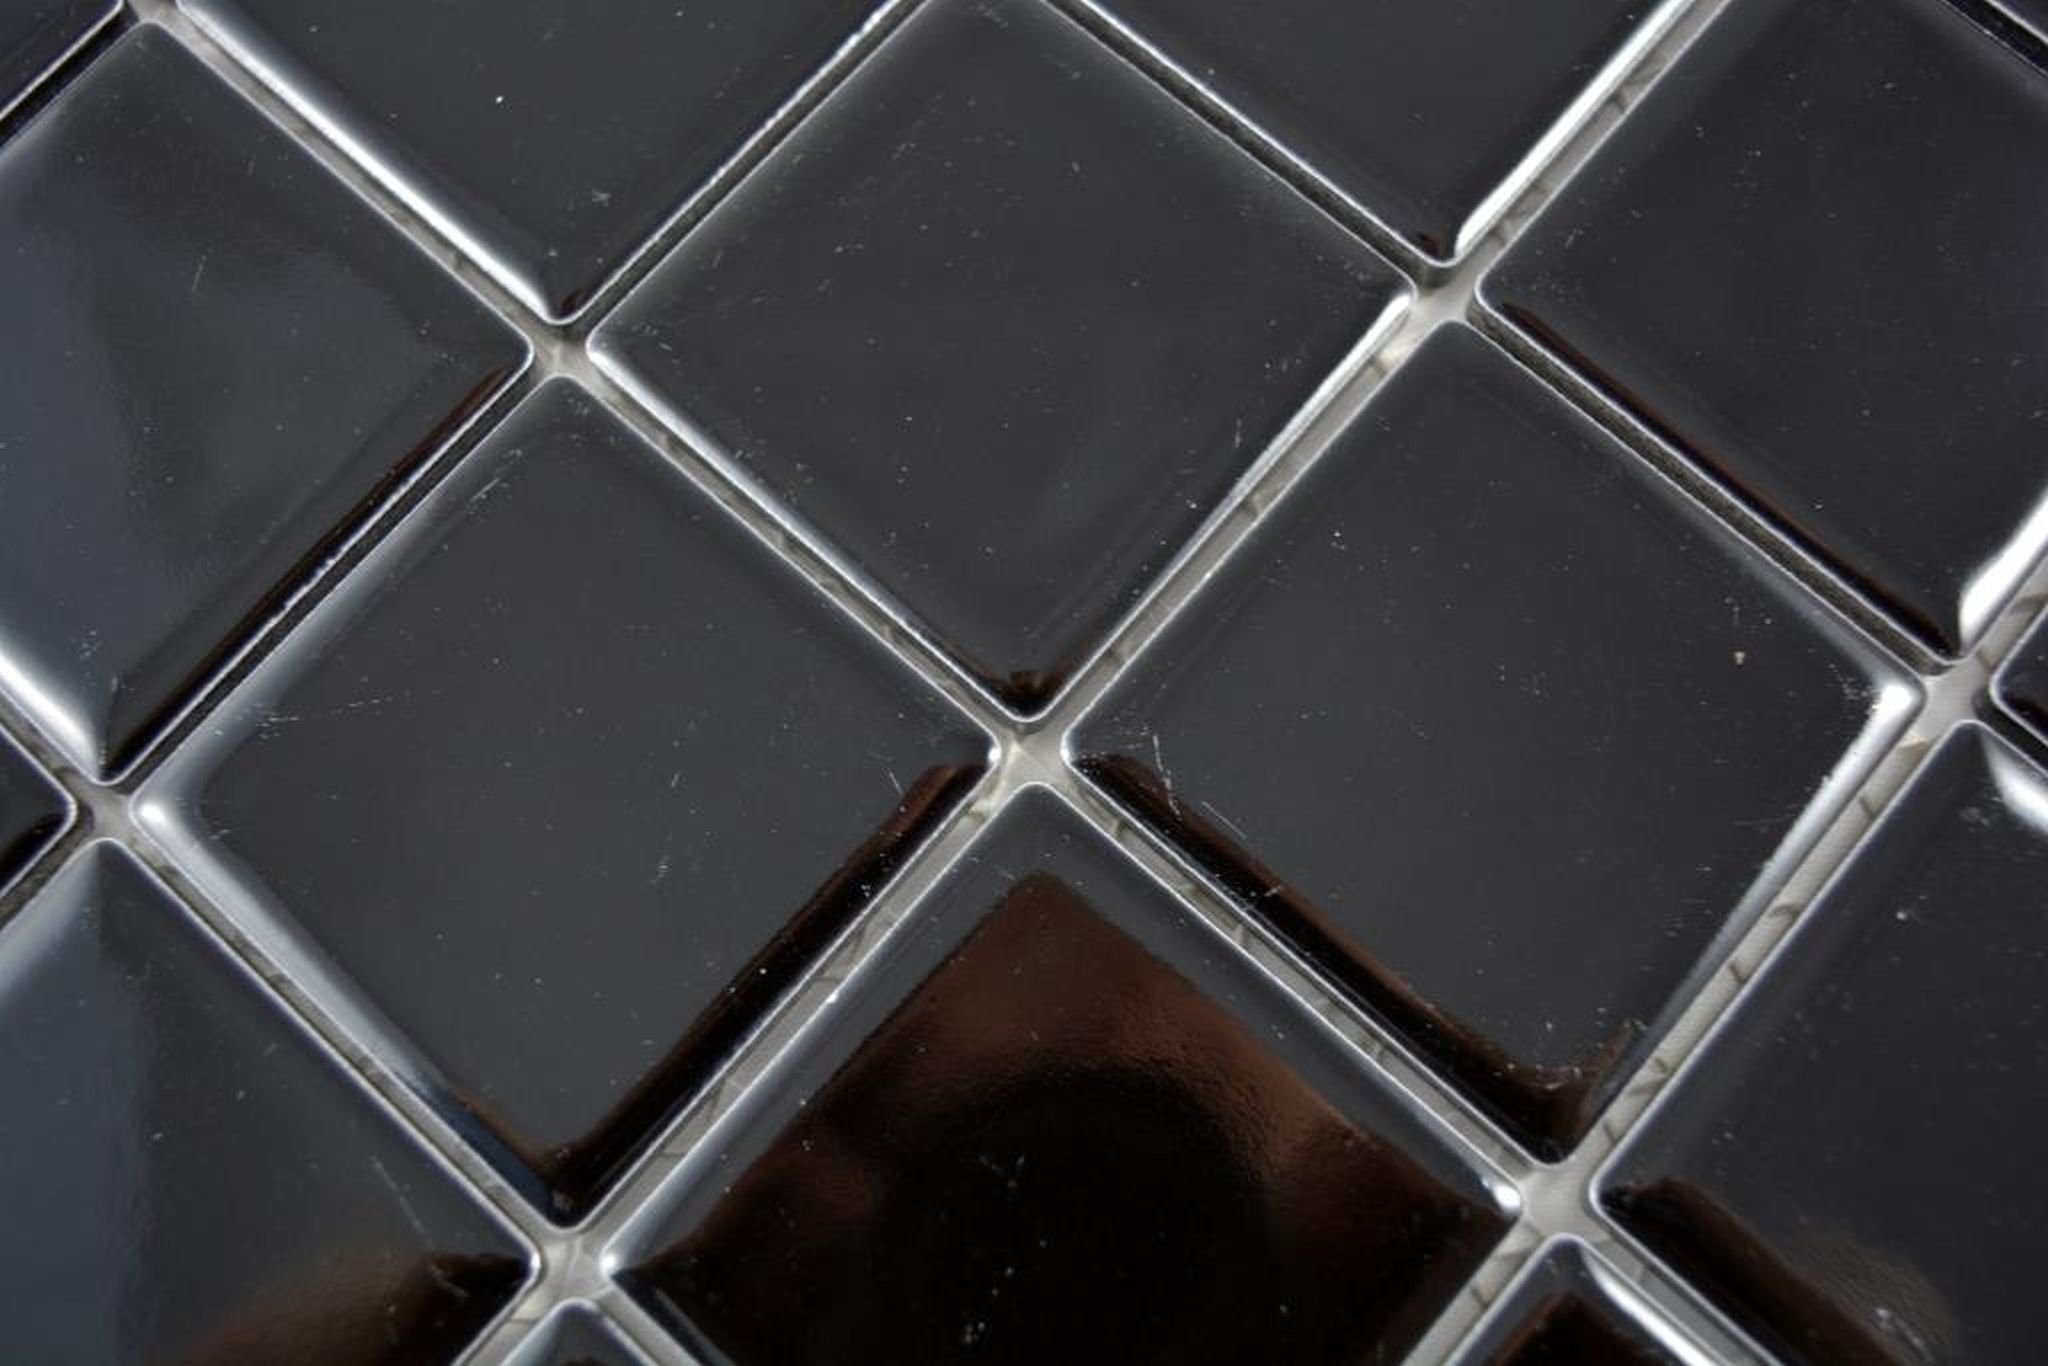 Mosani Mosaikfliesen Fliese schwarz Küchenrückwand Keramik Mosaik hochglanz